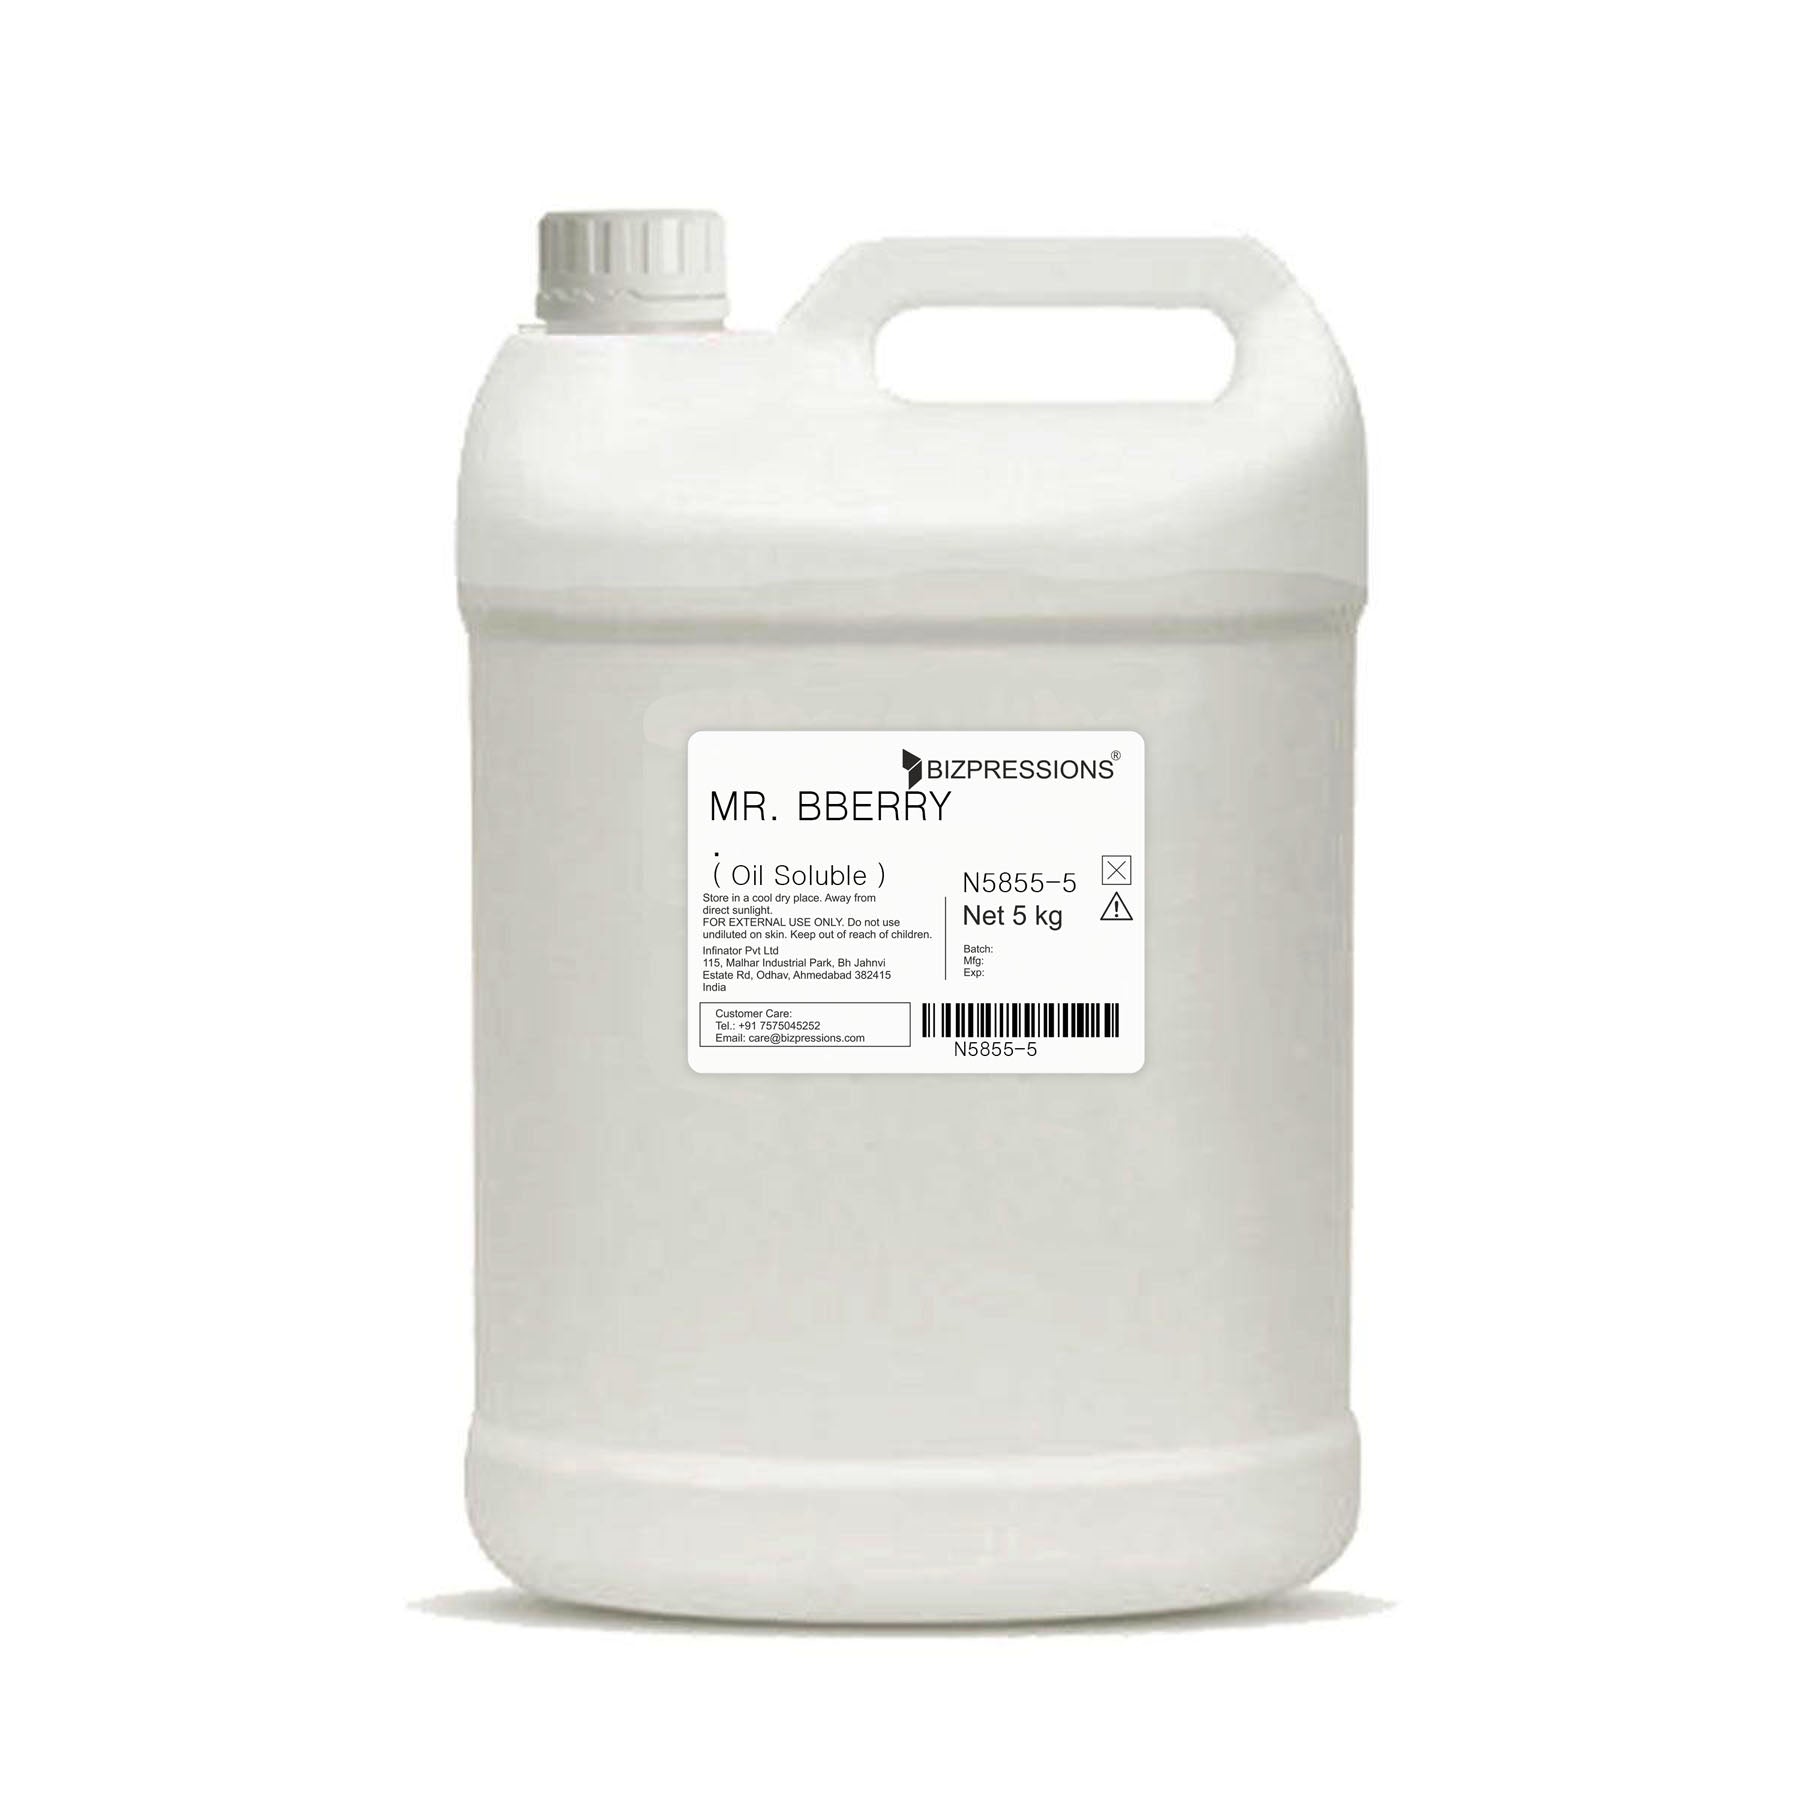 MR. BBERRY - Fragrance ( Oil Soluble ) - 5 kg